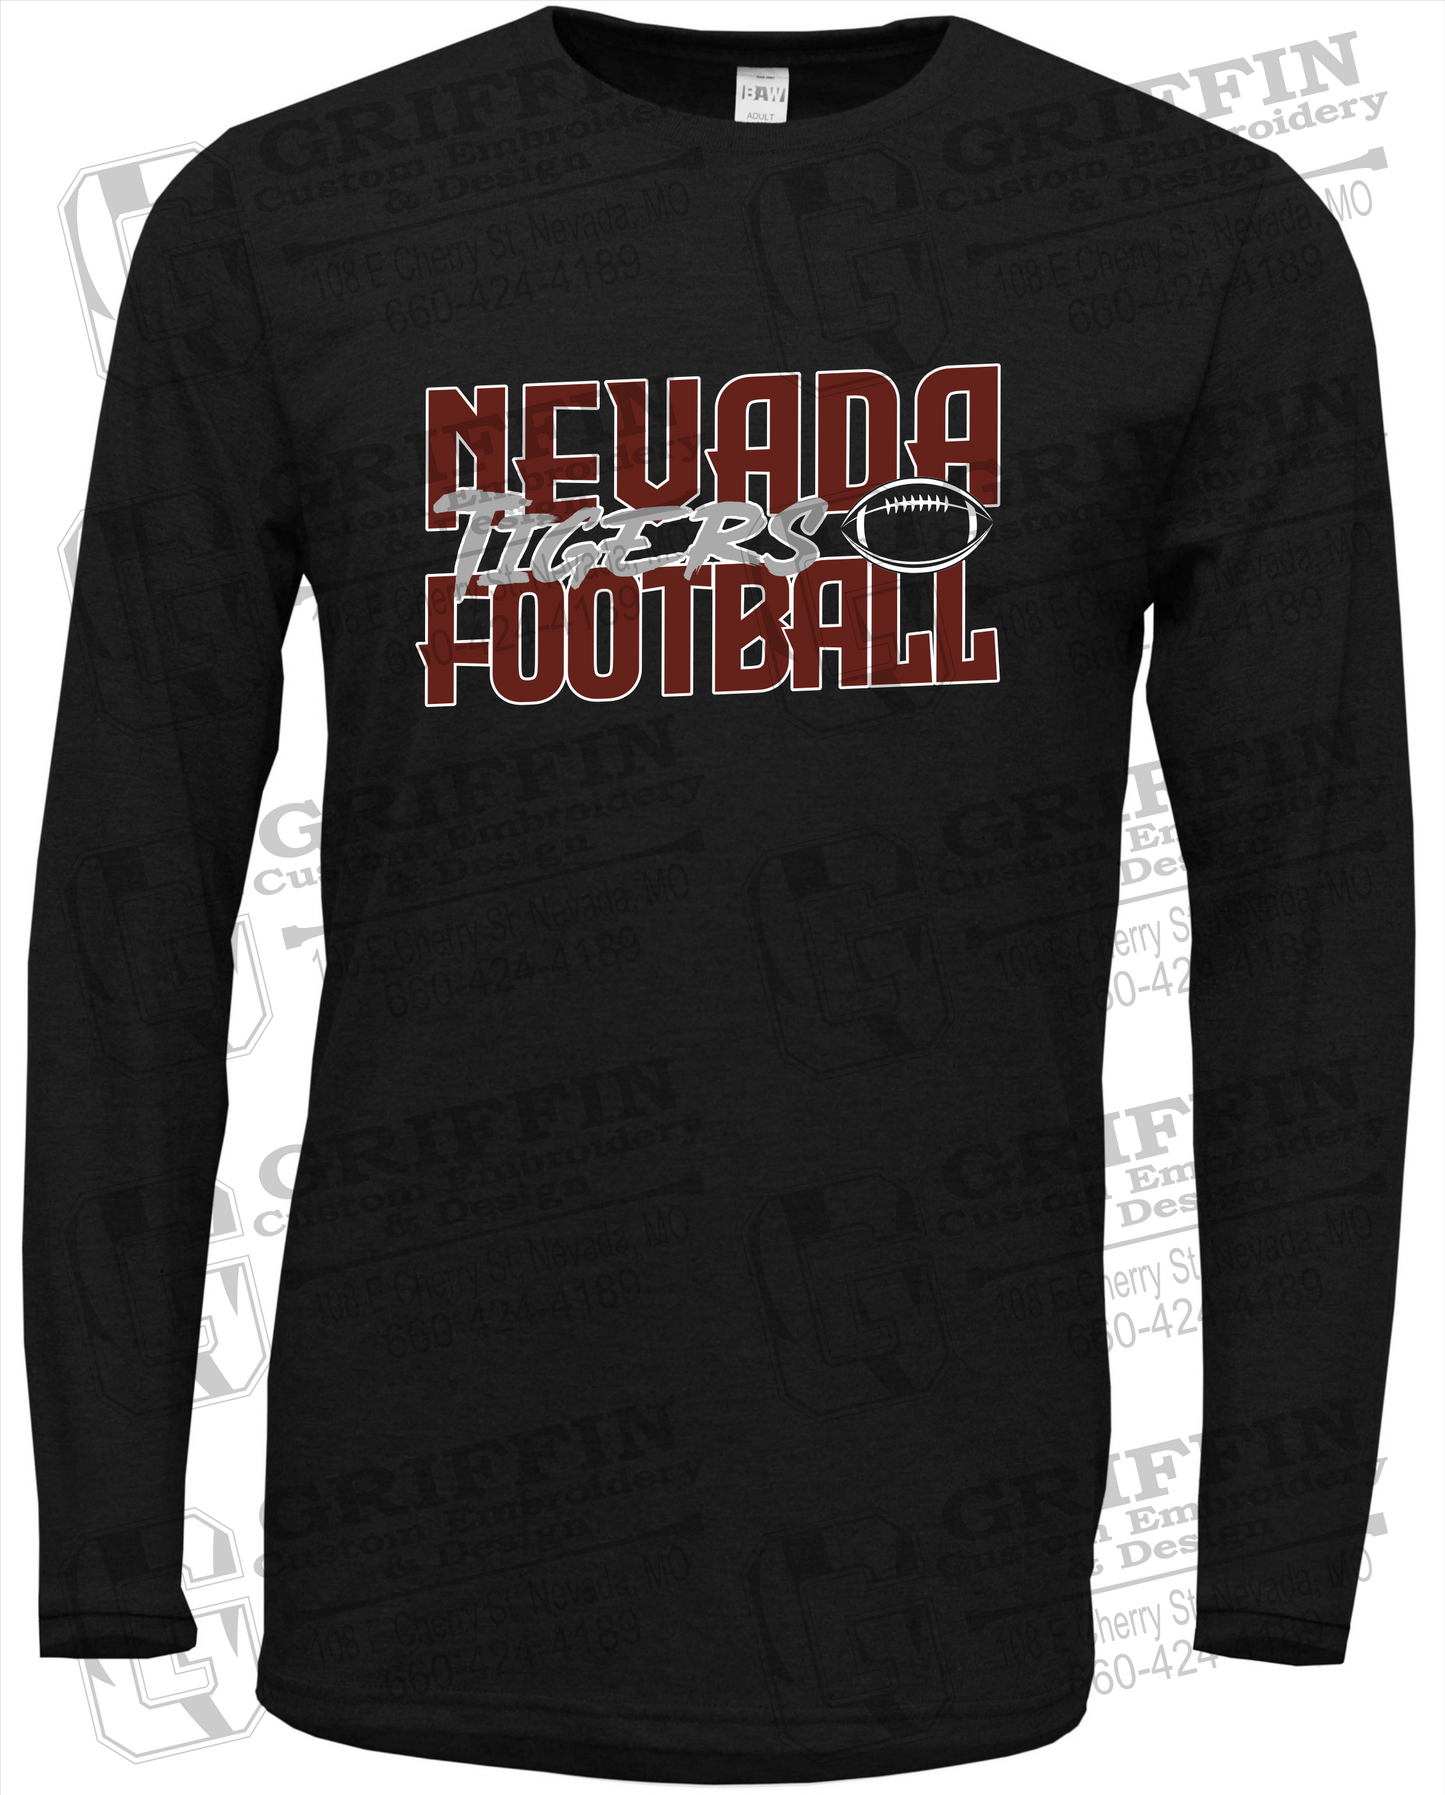 Soft-Tek Long Sleeve T-Shirt - Football - Nevada Tigers 23-P